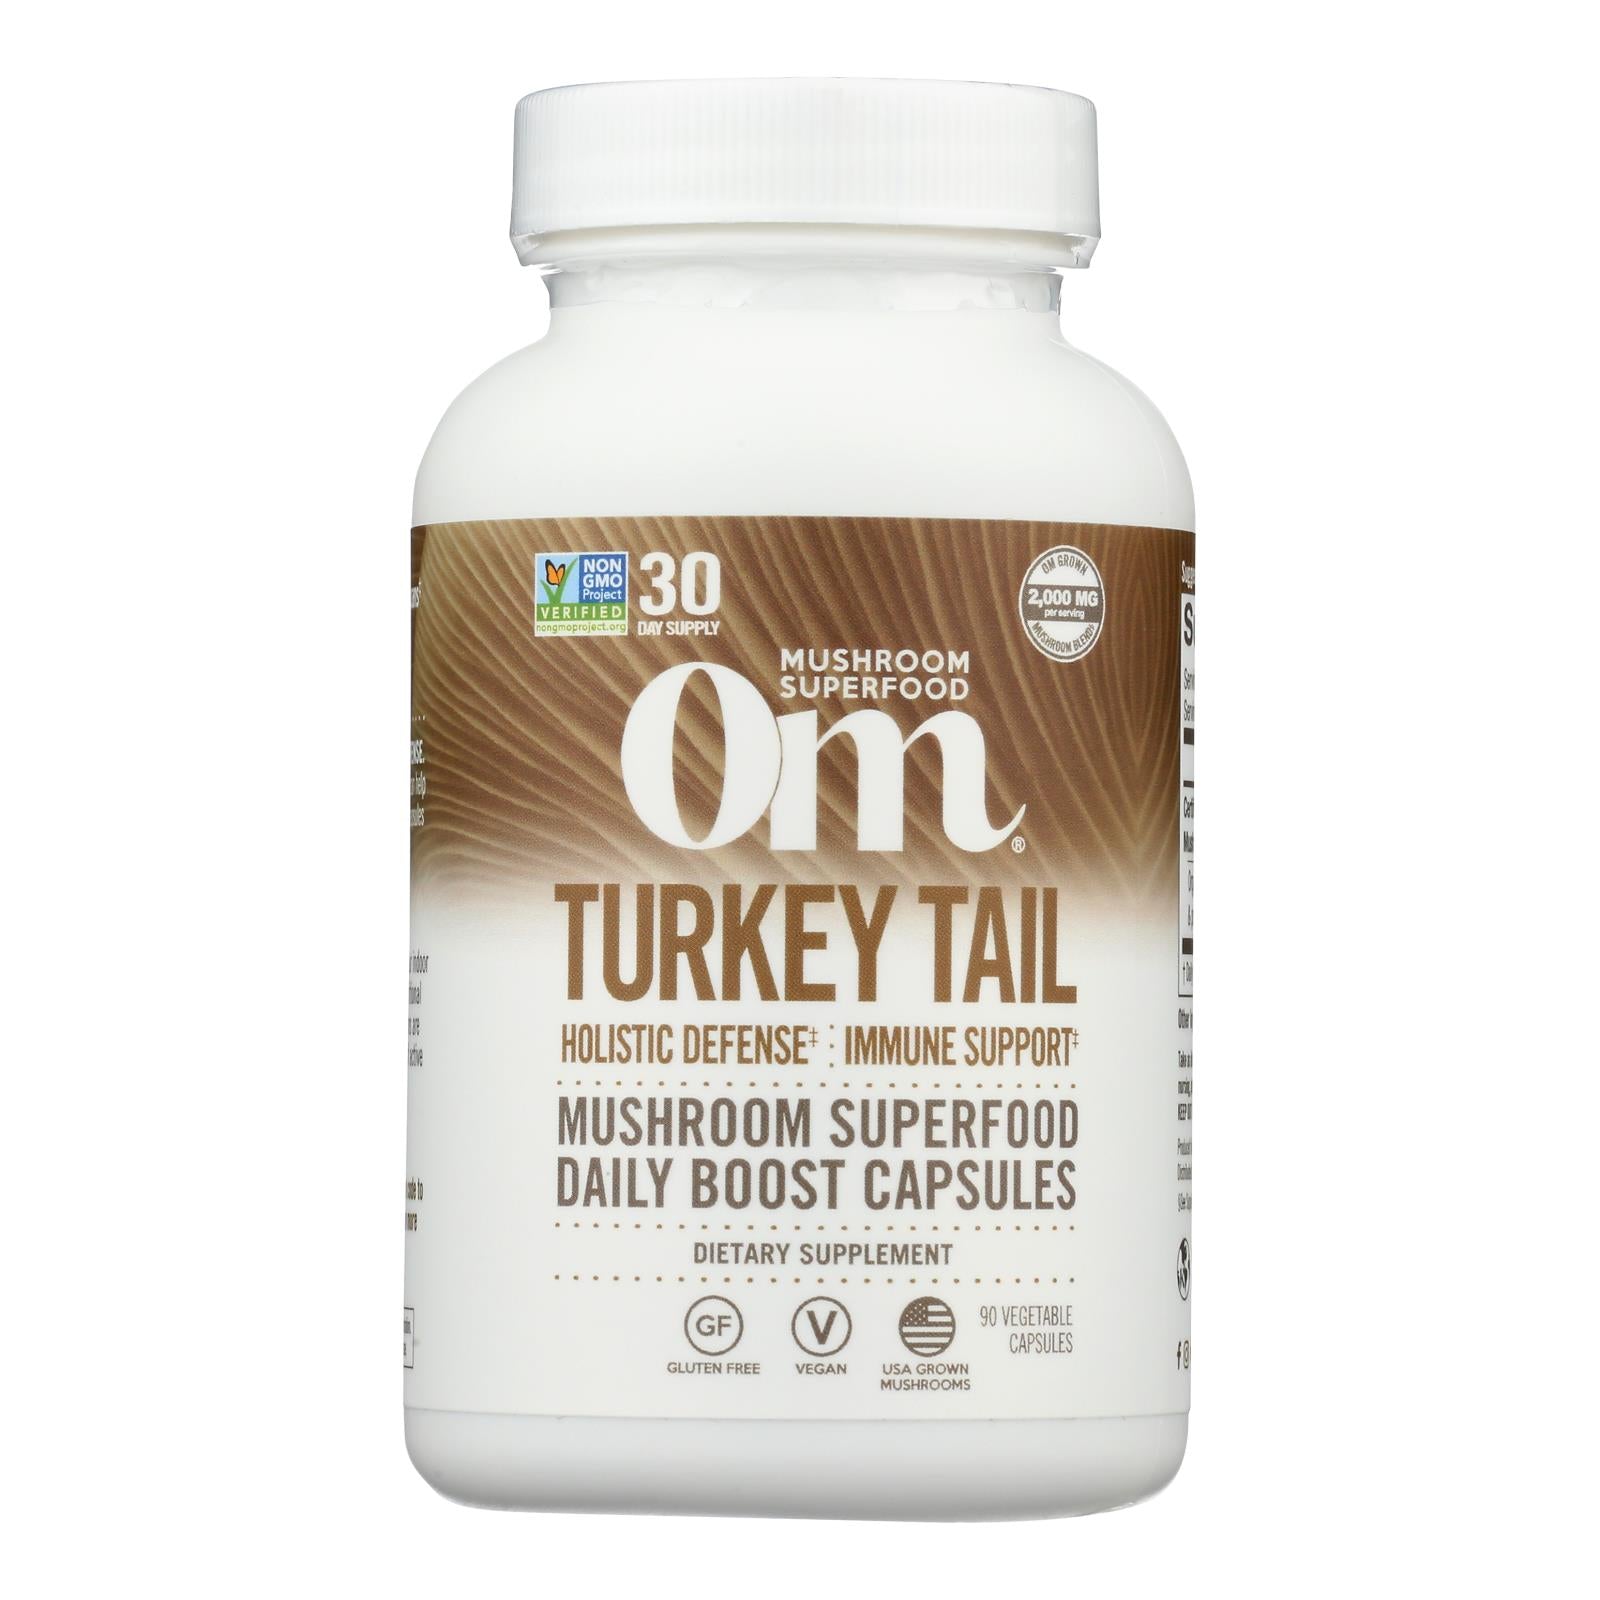 Organic Mushroom Nutrition - Mush Sprfd Turkey Tail - 1 Each - 90 Ct